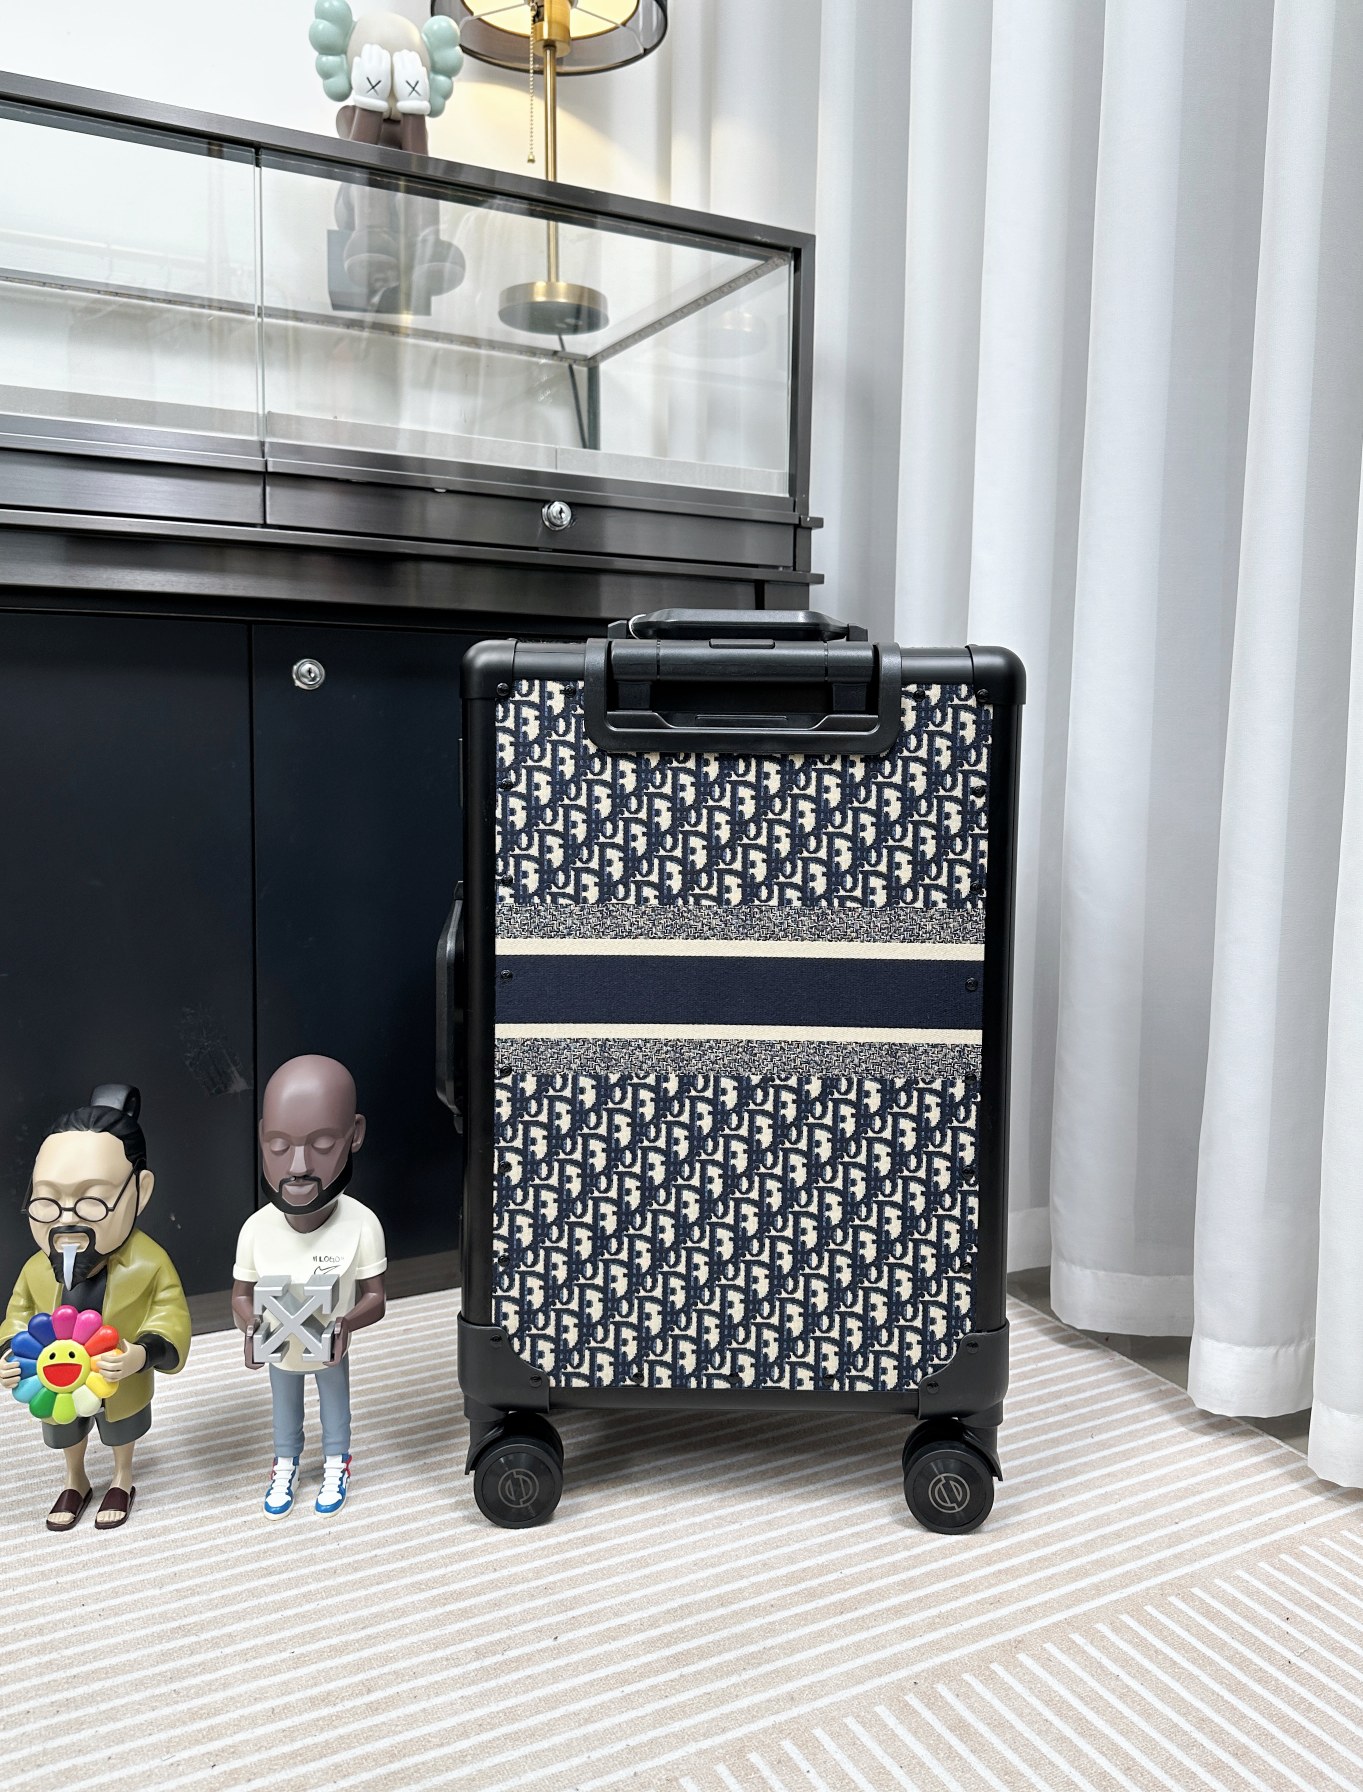 Christian Dior Suitcase